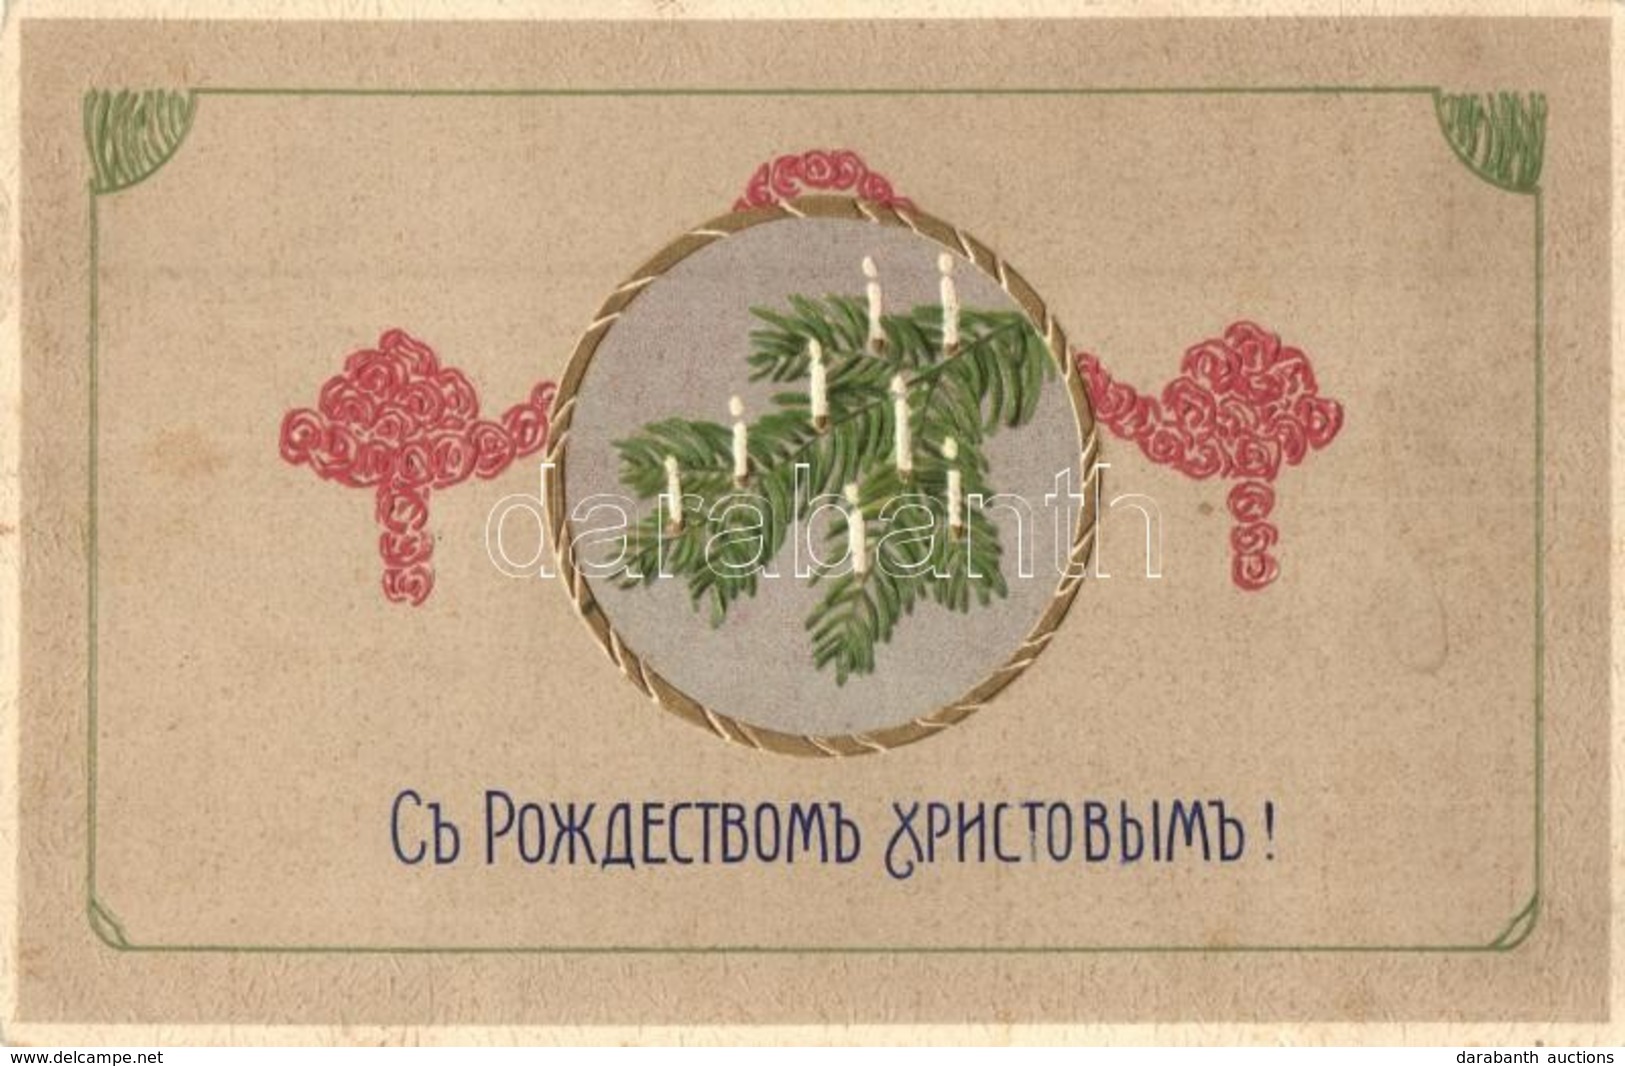 2 Db Régi Dombornyomott Virágos üdvözl?lap / 2 Pre-1945 Flower Motive Greeting Cards, Emb. - Ohne Zuordnung